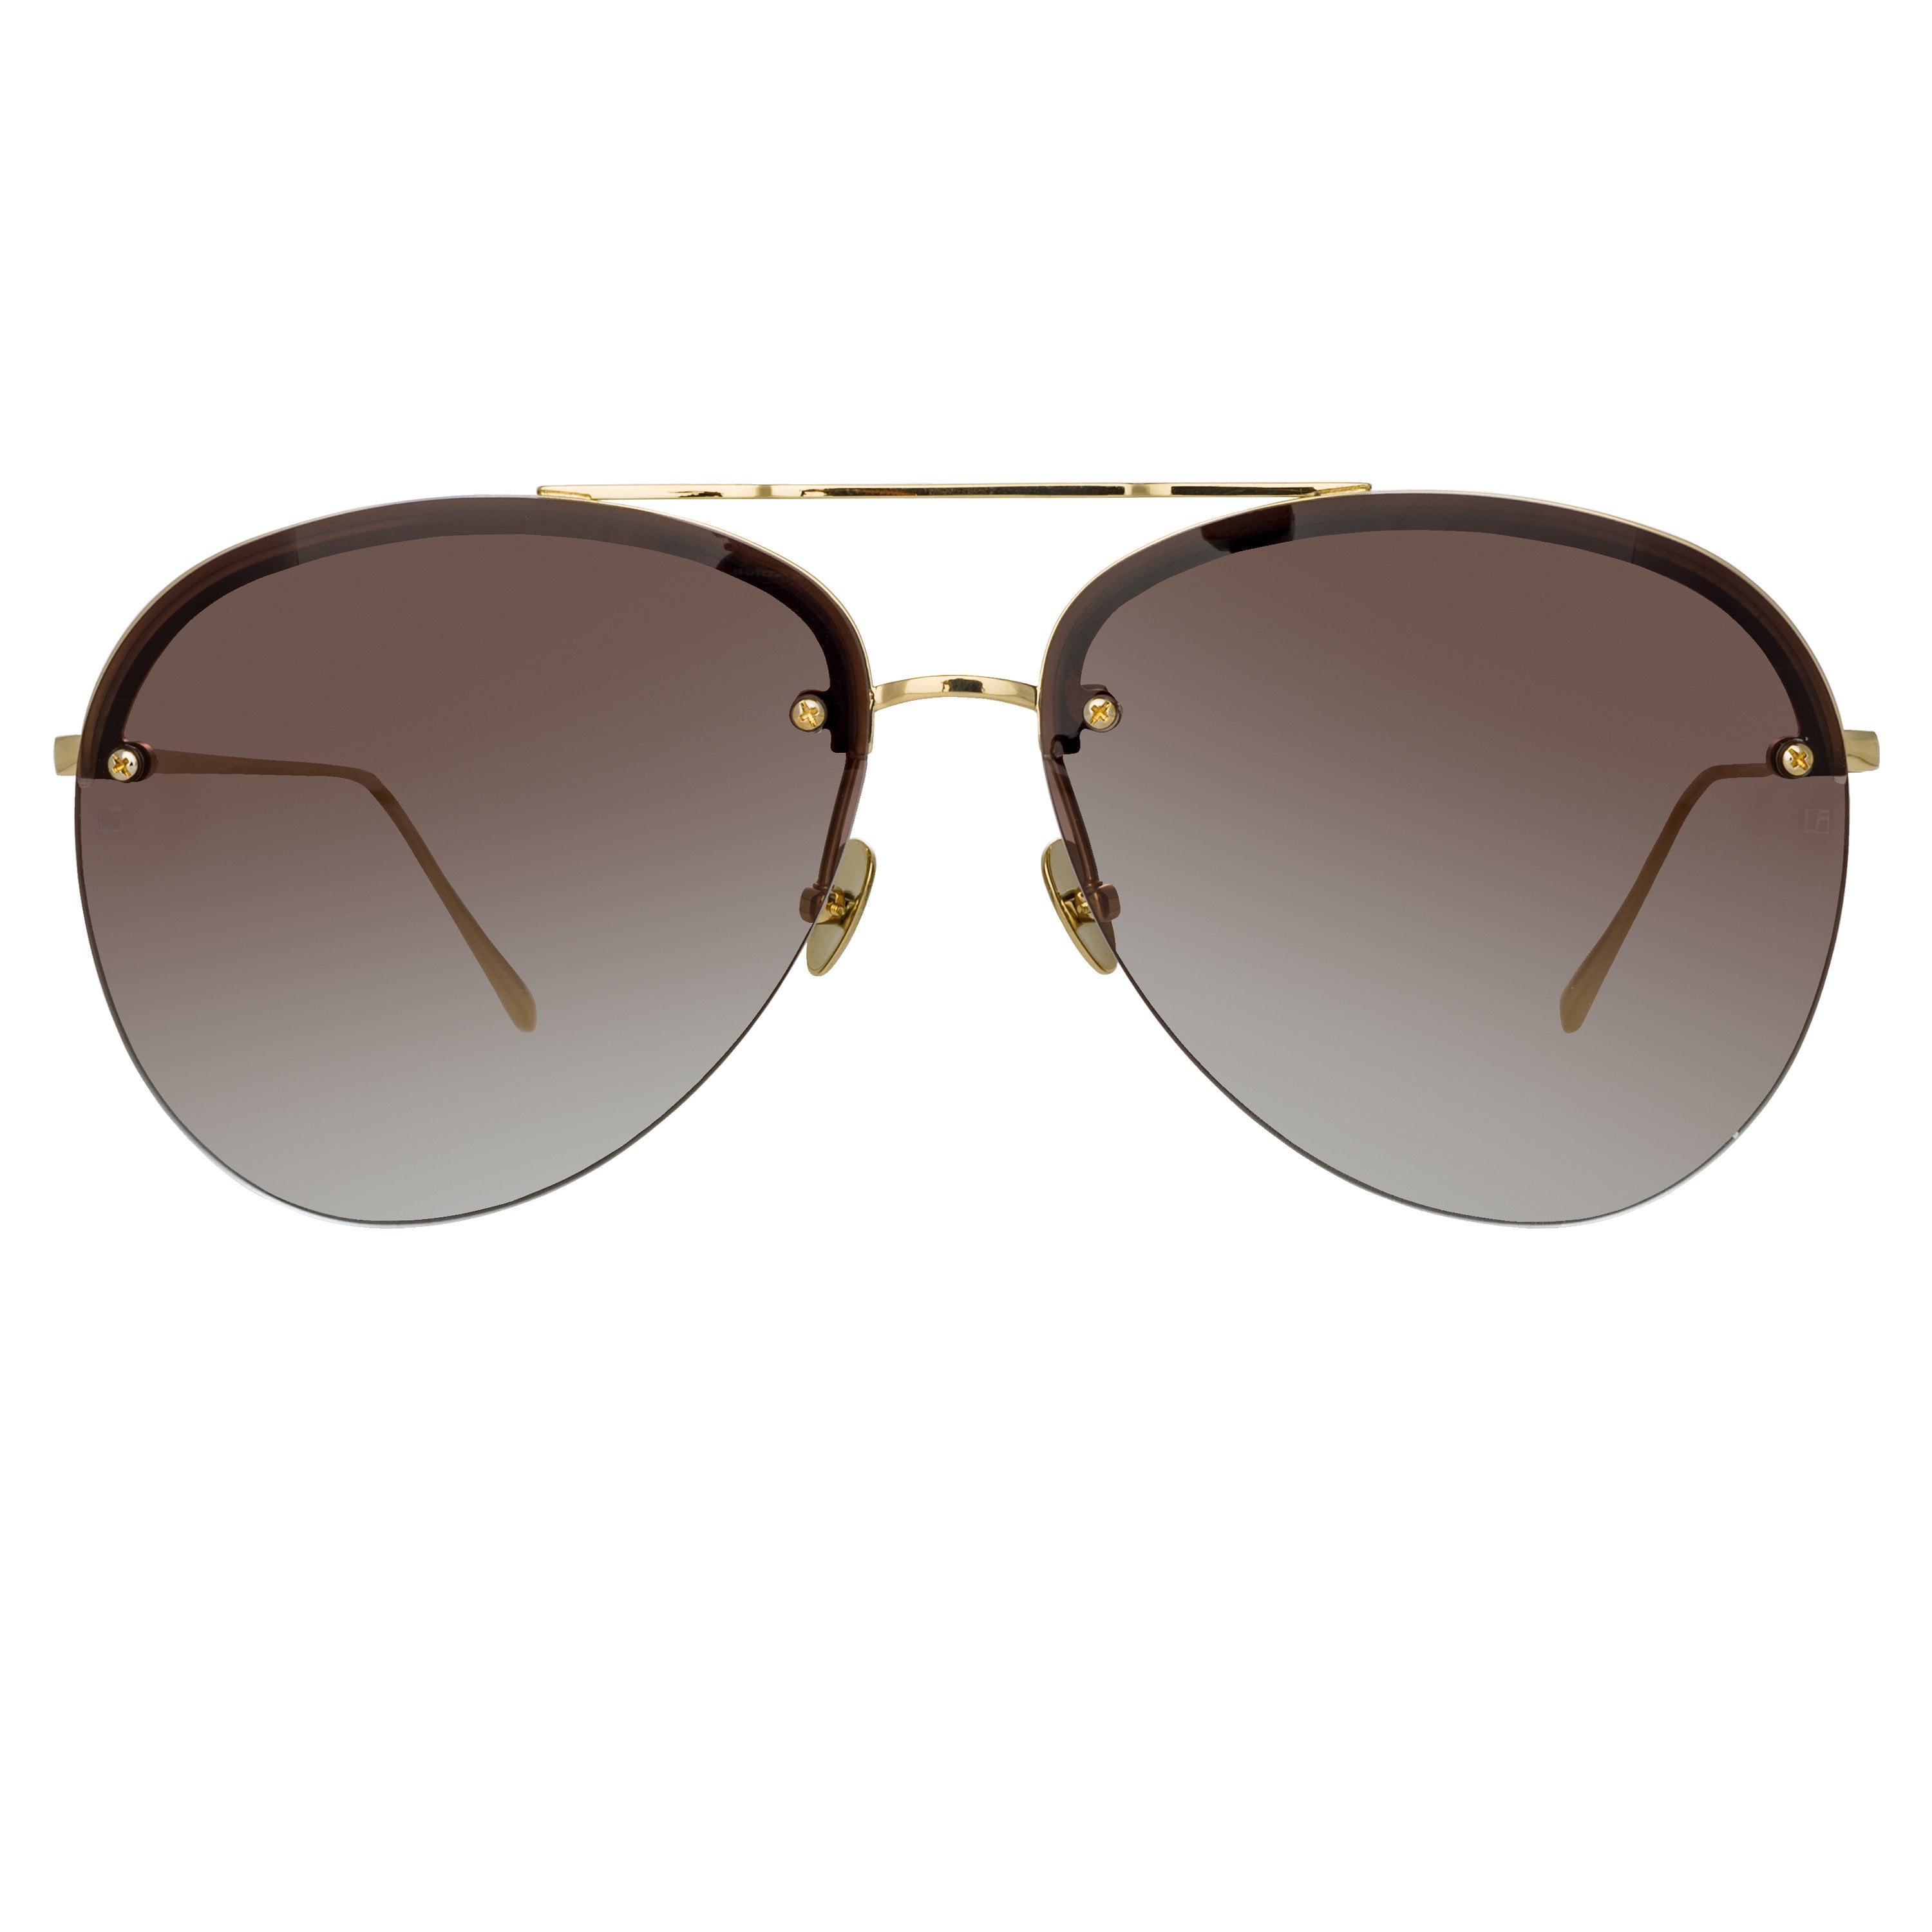 Color_LFL1096C3SUN - Dee Aviator Sunglasses in Light Gold and Grey